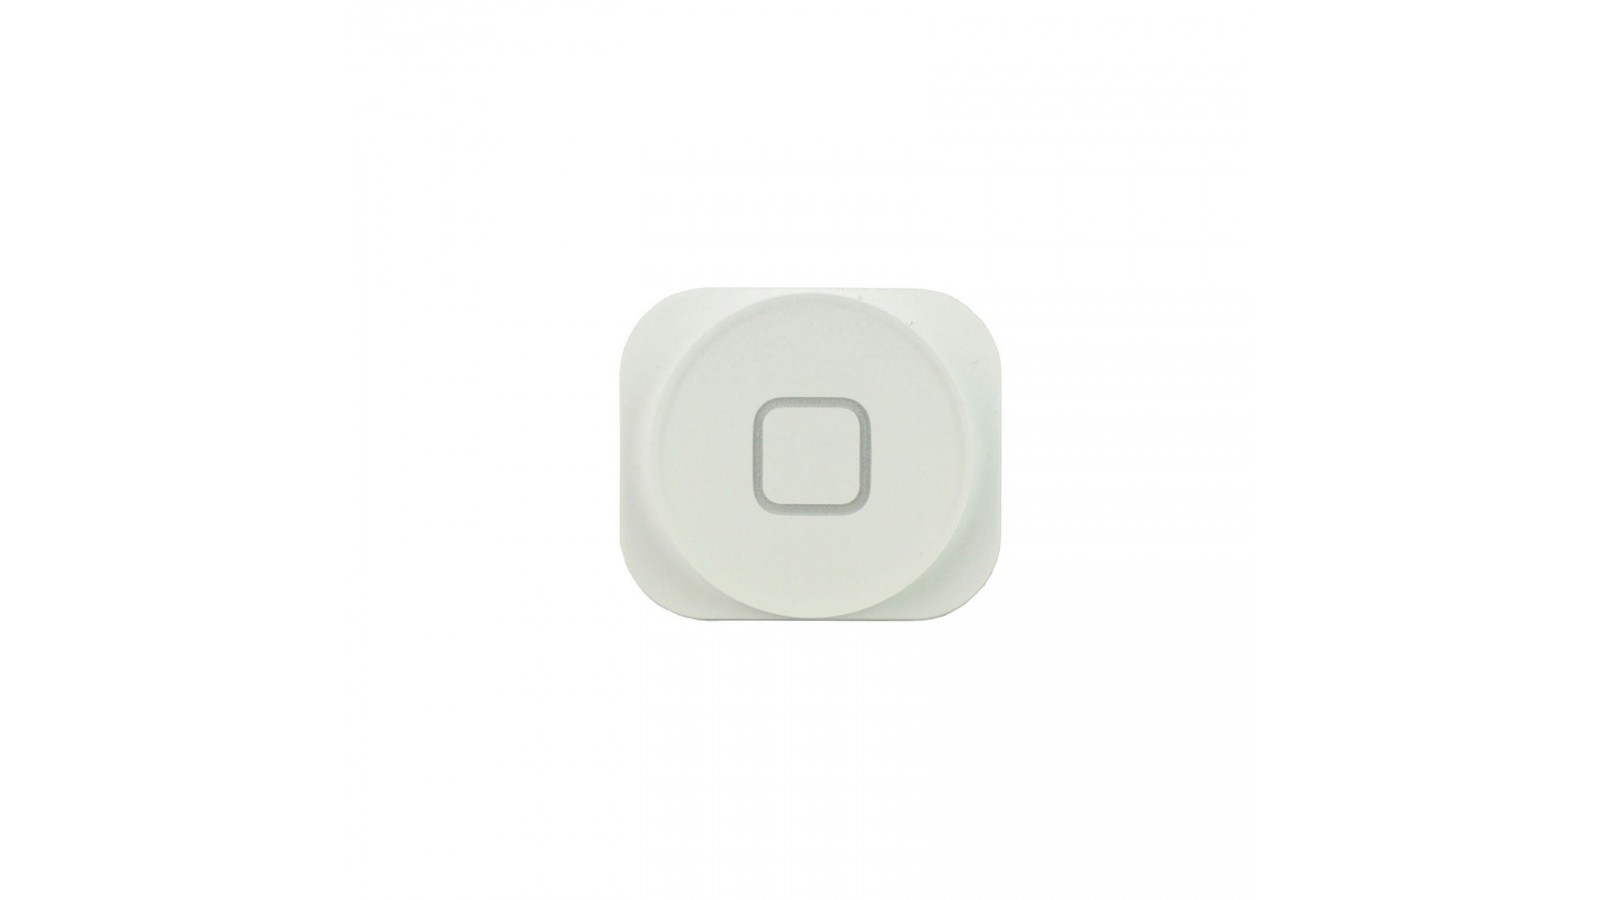 Tasto Home Bianco per Apple iPhone 5C